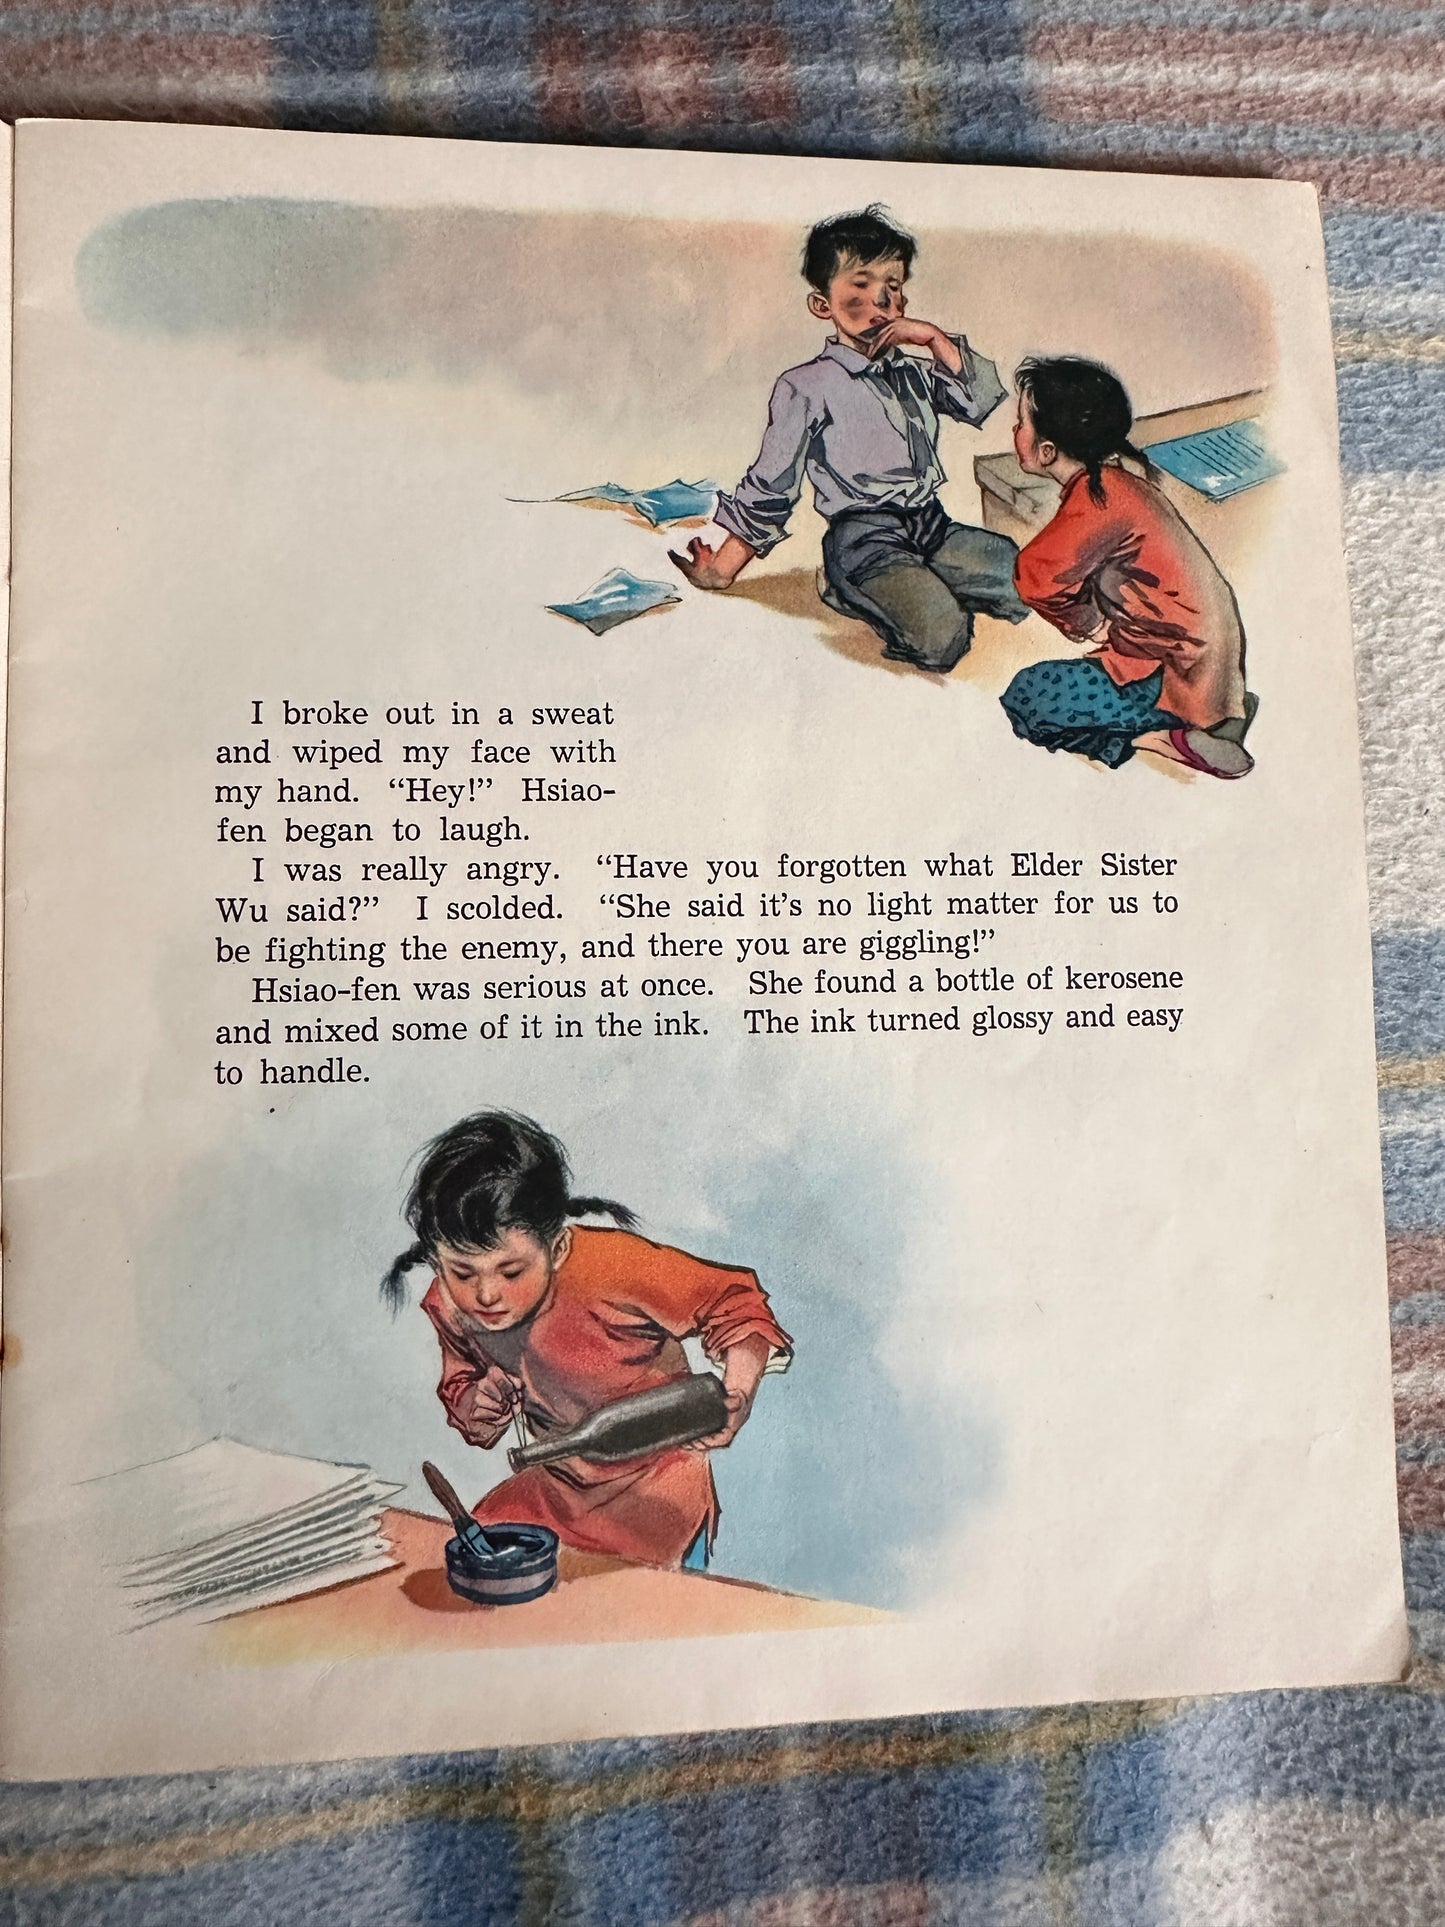 1965 Secret Bulletin - Kao Sha(Illust Hua Shan-chuan) Foreign Language Press Peking